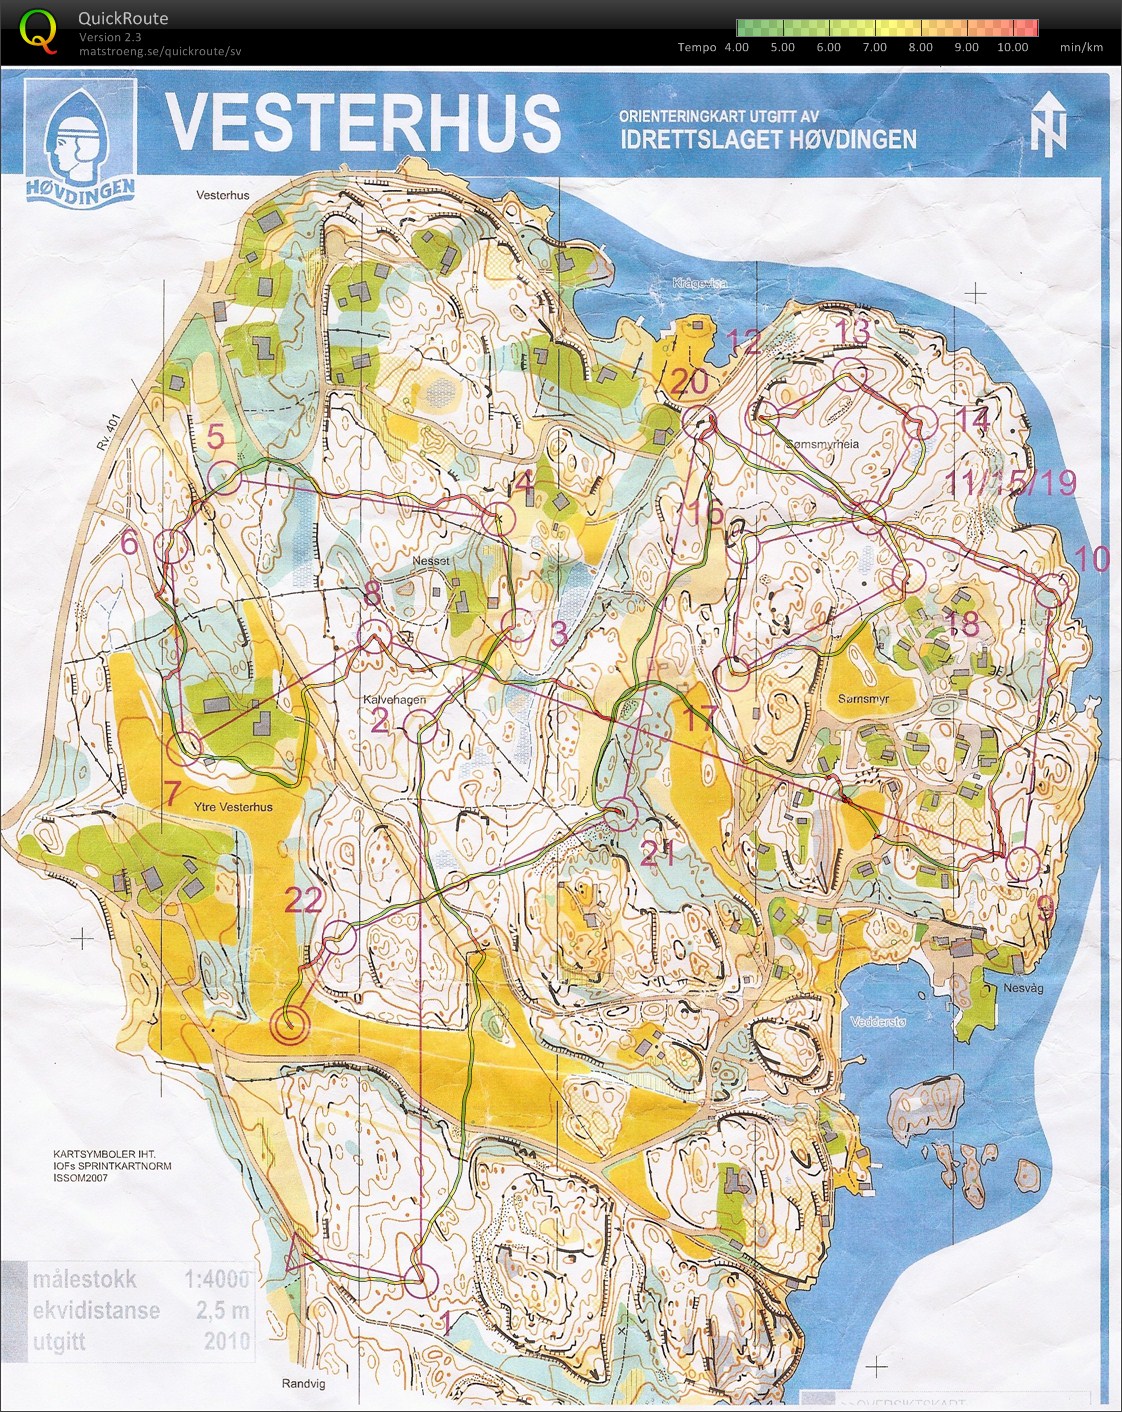 Träning Kristiansand1 karta1 (03-11-2010)